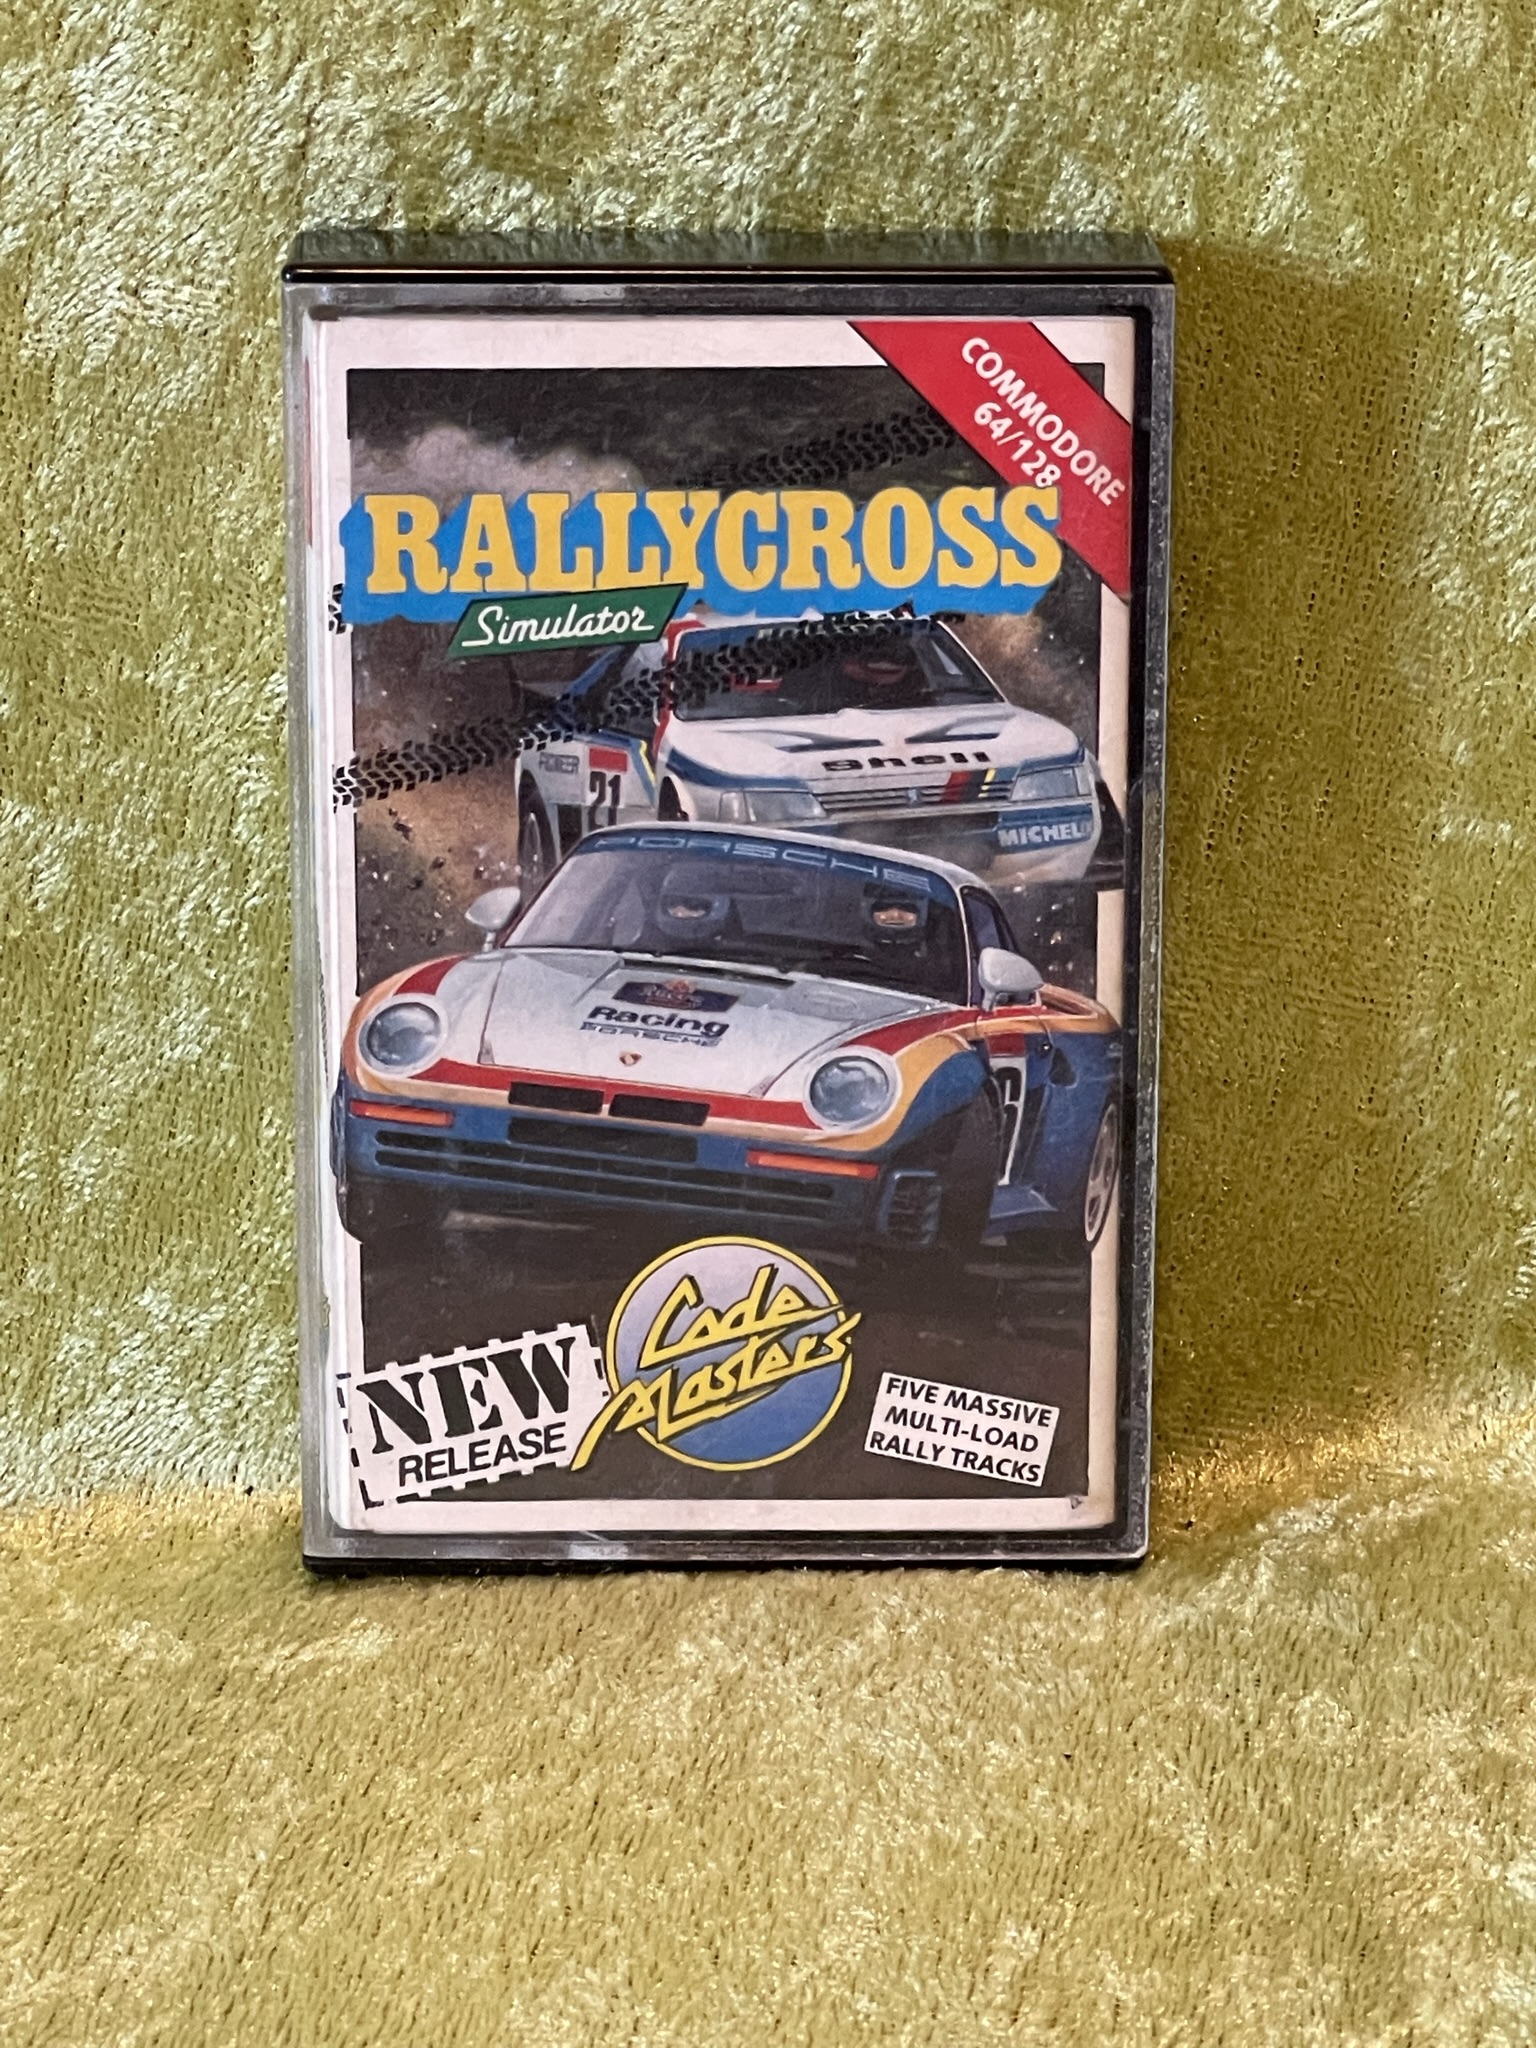 Rallycross